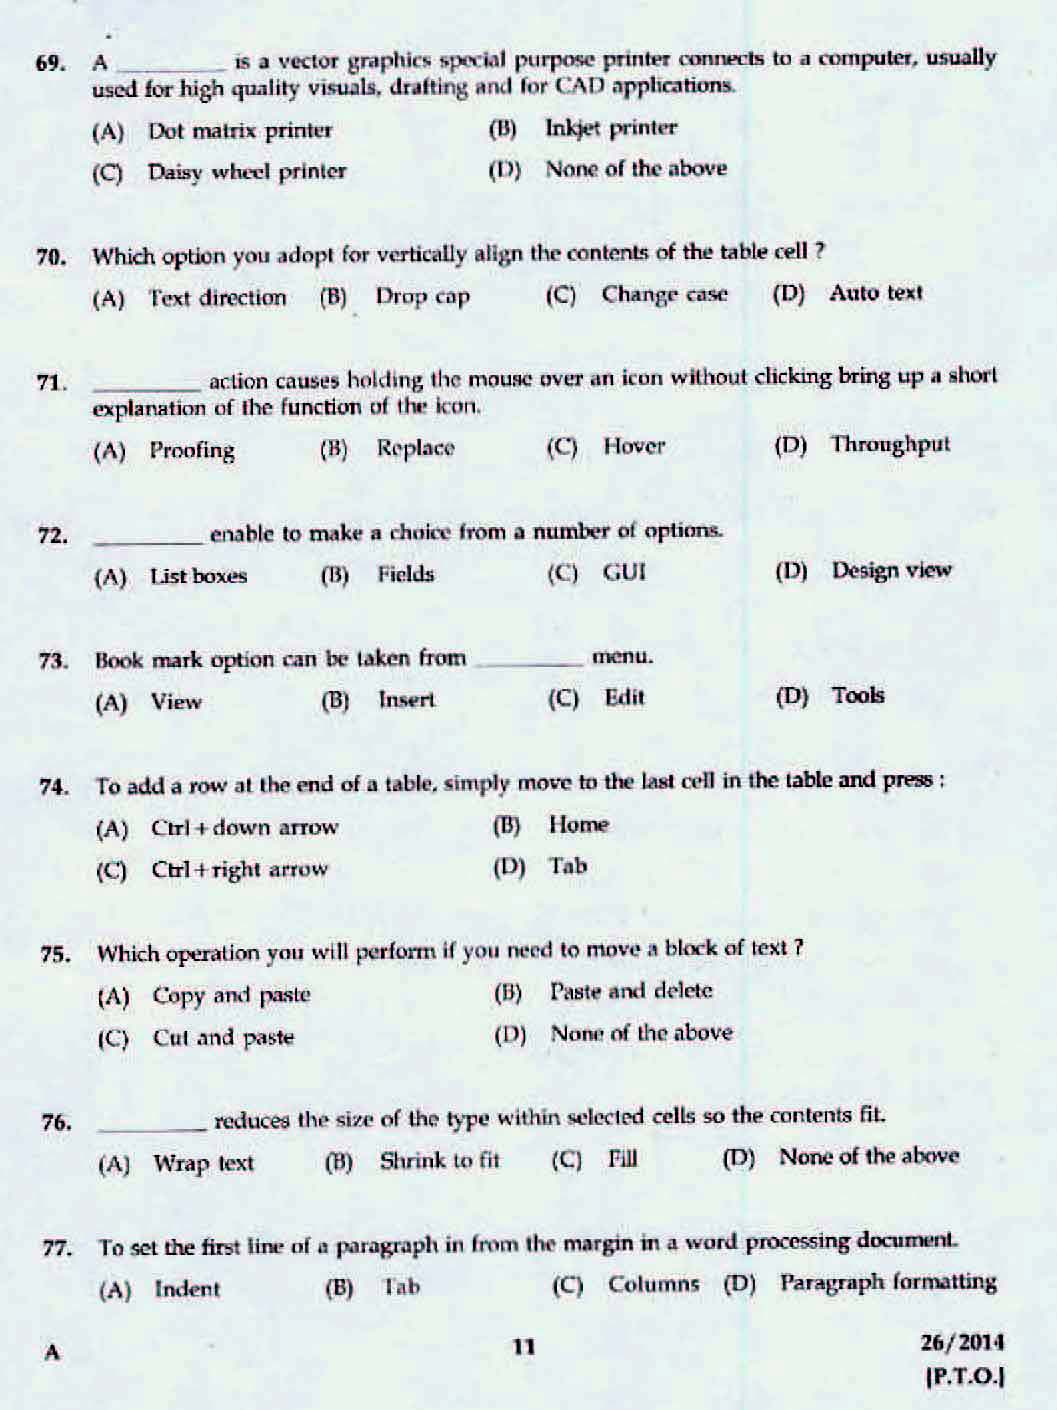 Kerala LD Typist Exam 2014 Question Paper Code 262014 9